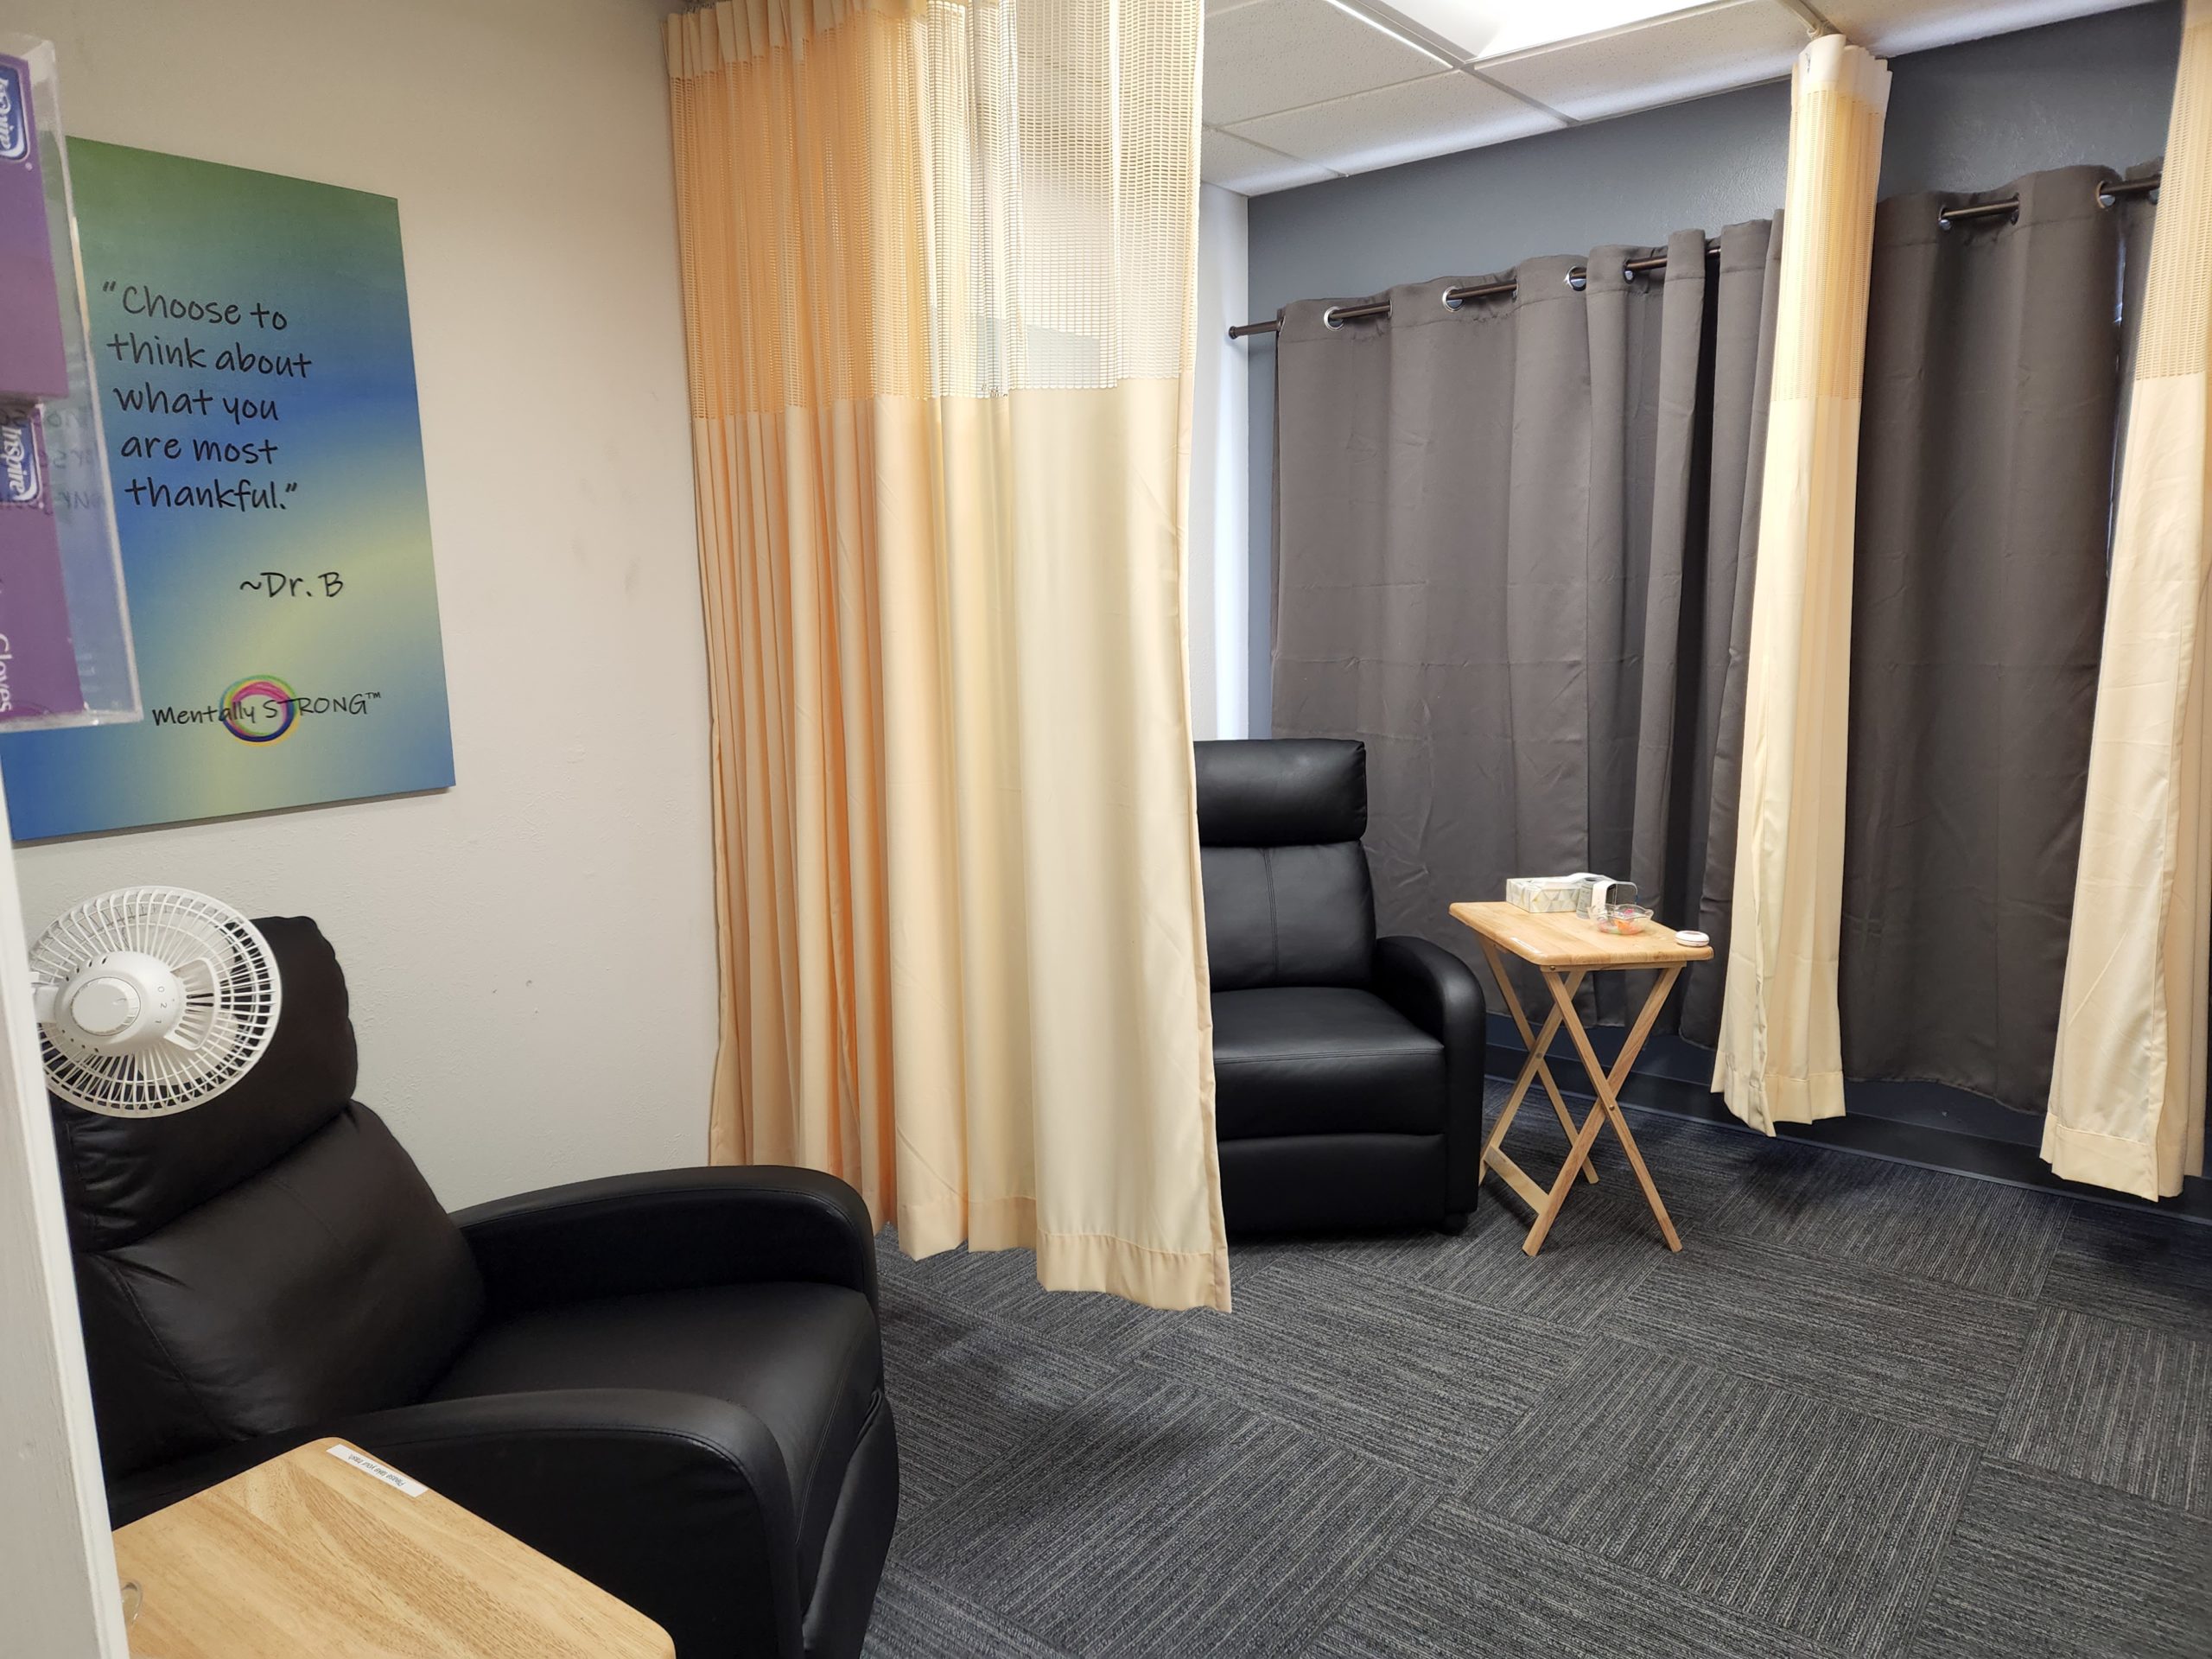 ketamine treatment center and room